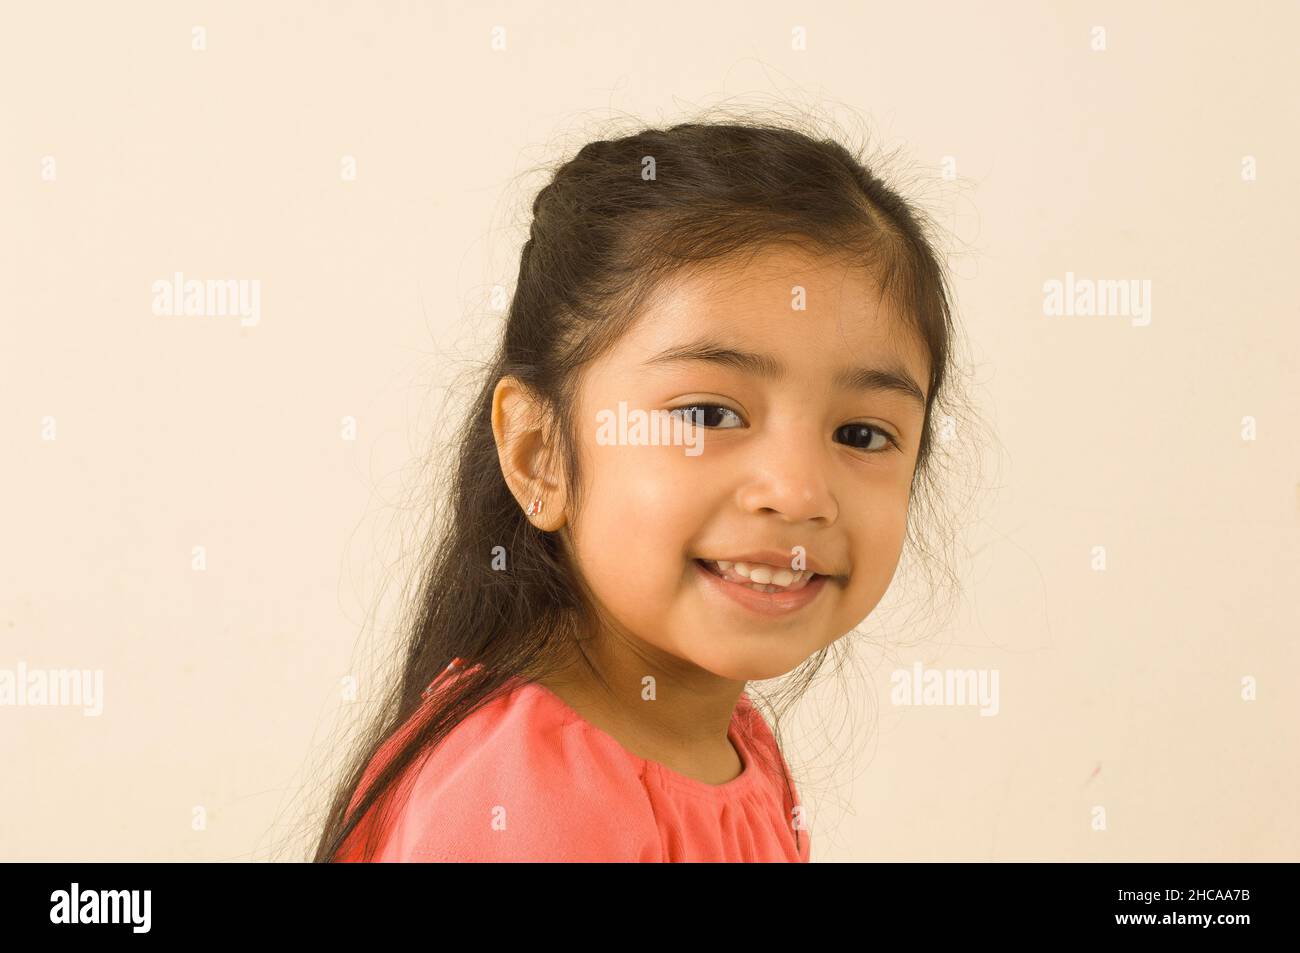 3 year old girl portrait closeup Stock Photo